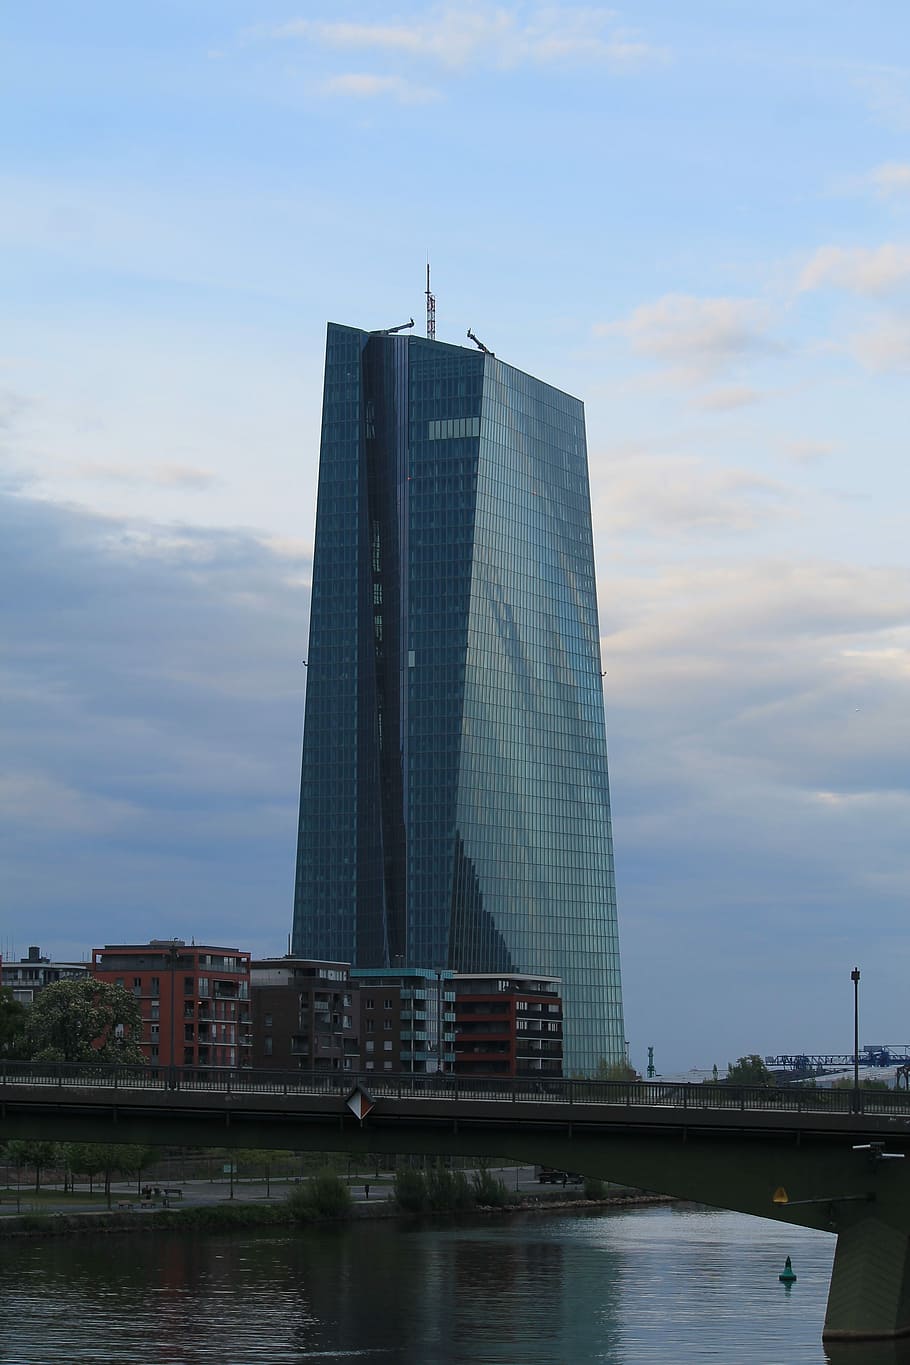 Frankfurt, Ecb, europeo, cinturón central, banco central europeo, rascacielos, finanzas, dinero, moneda, euro